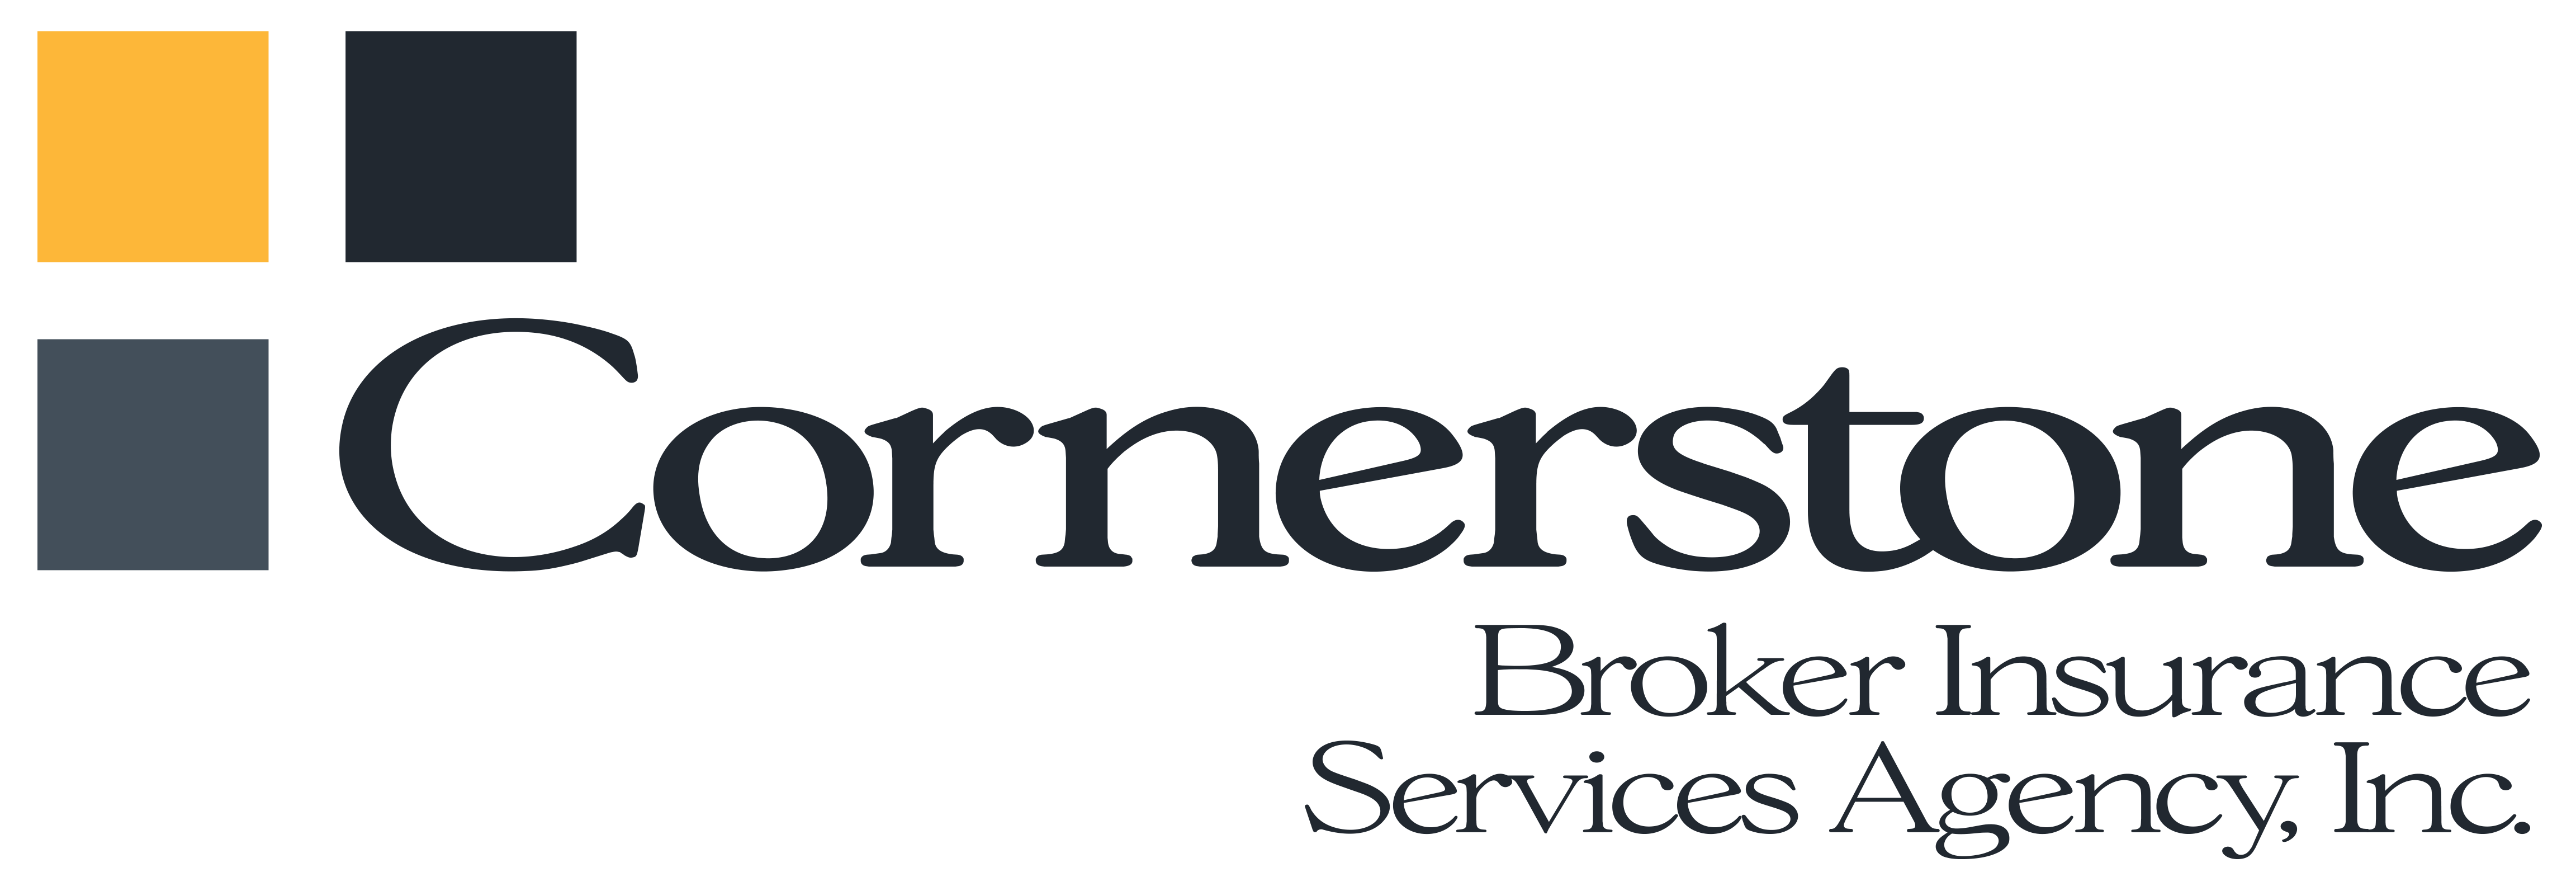 Cornerstone Broker Insurance Services Agency logo